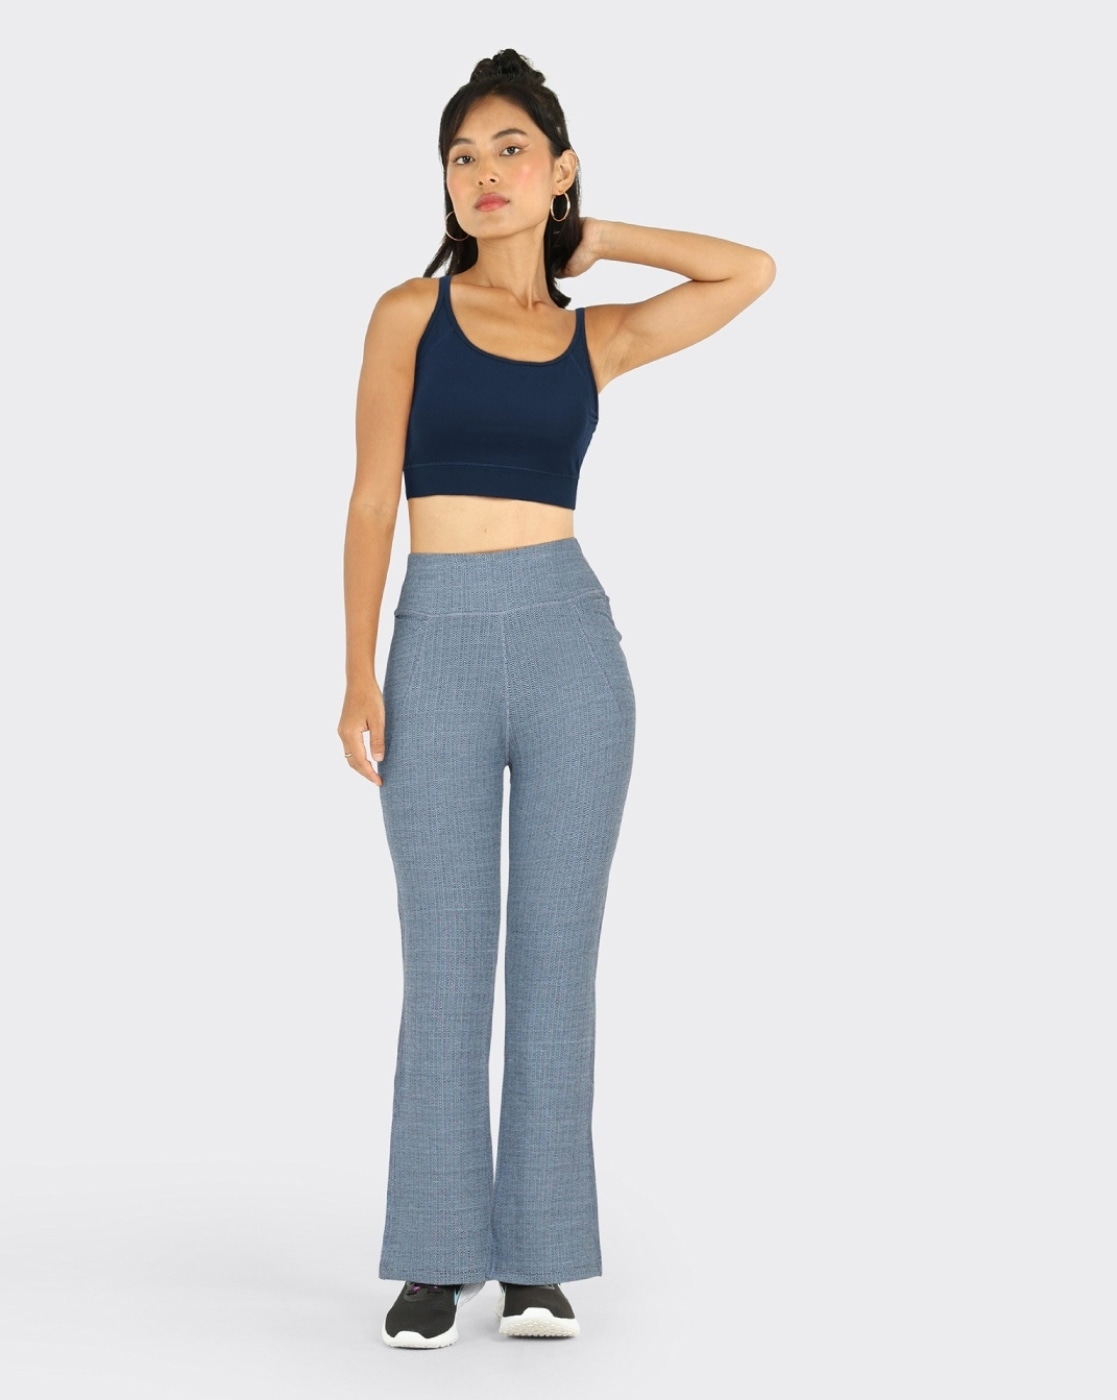 Buy Navy blue Trousers & Pants for Women by BLISSCLUB Online